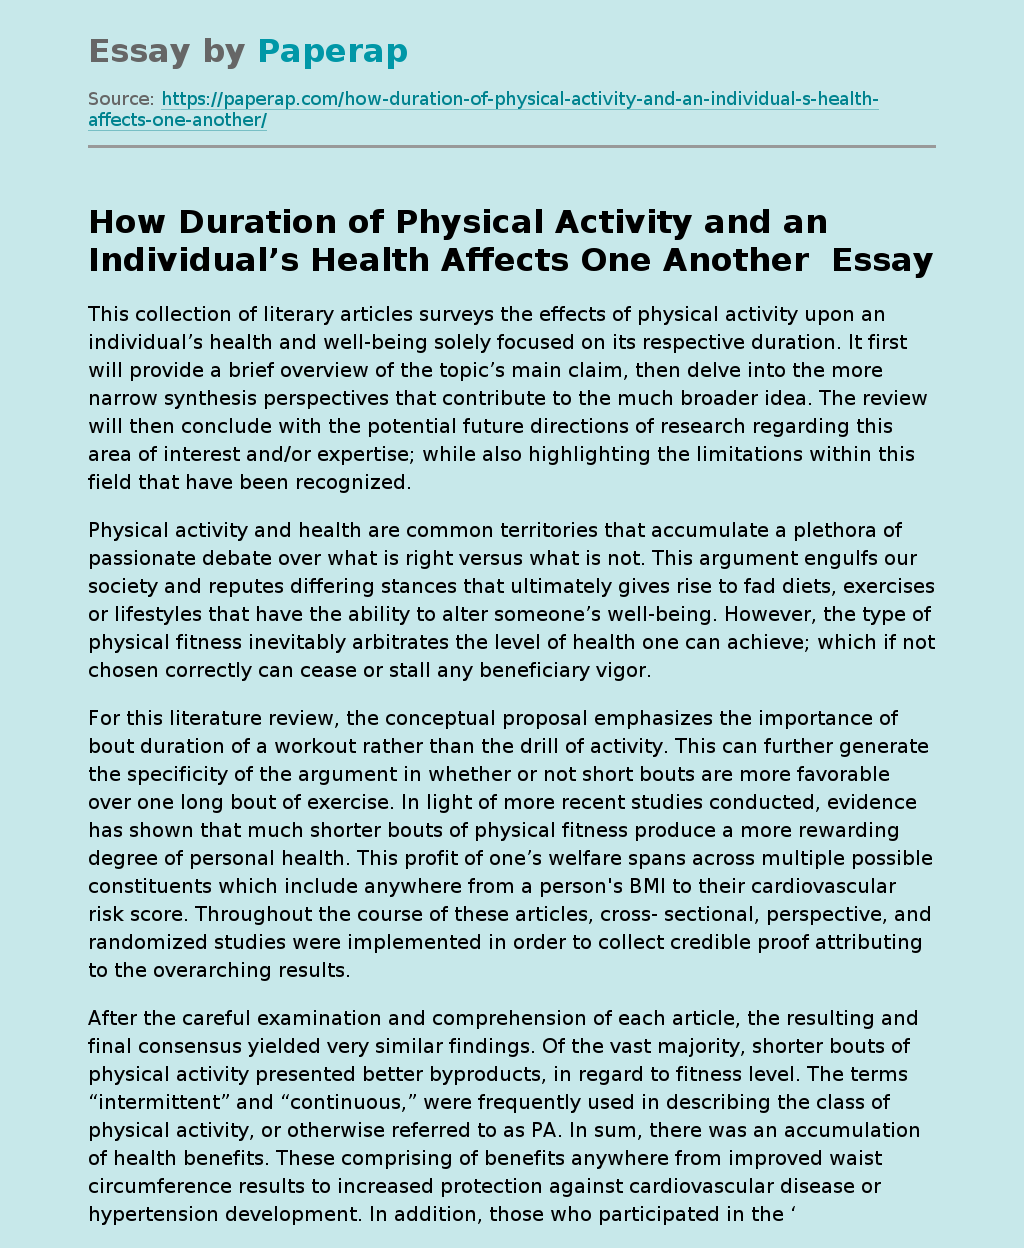 Activity Duration and Health Correlation